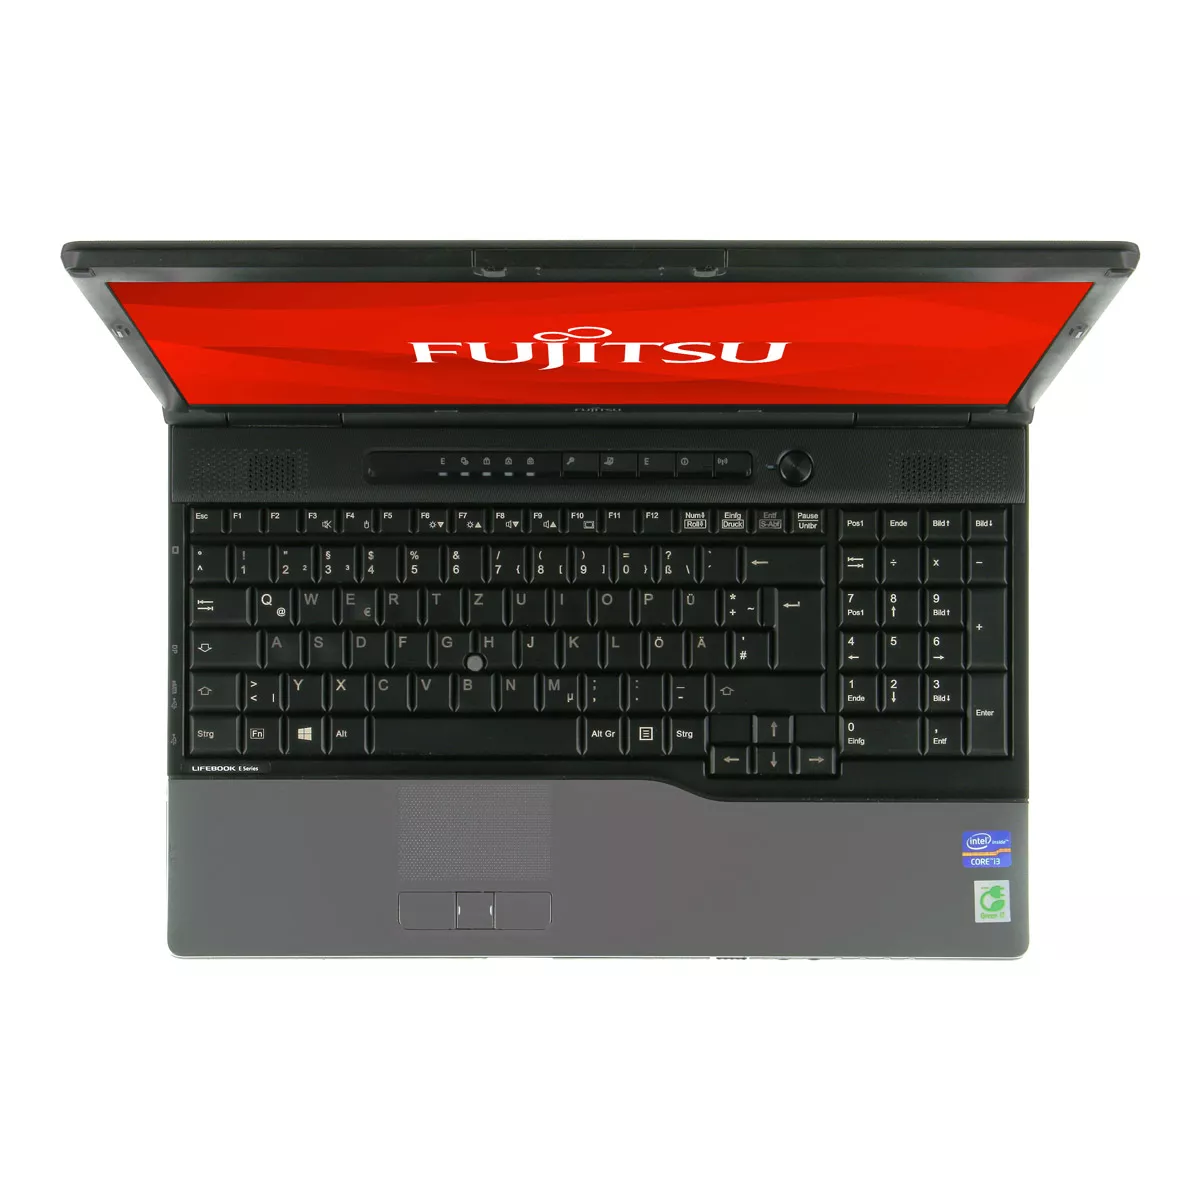 Fujitsu Lifebook E752 Core i3 3110M 2,40 GHz A